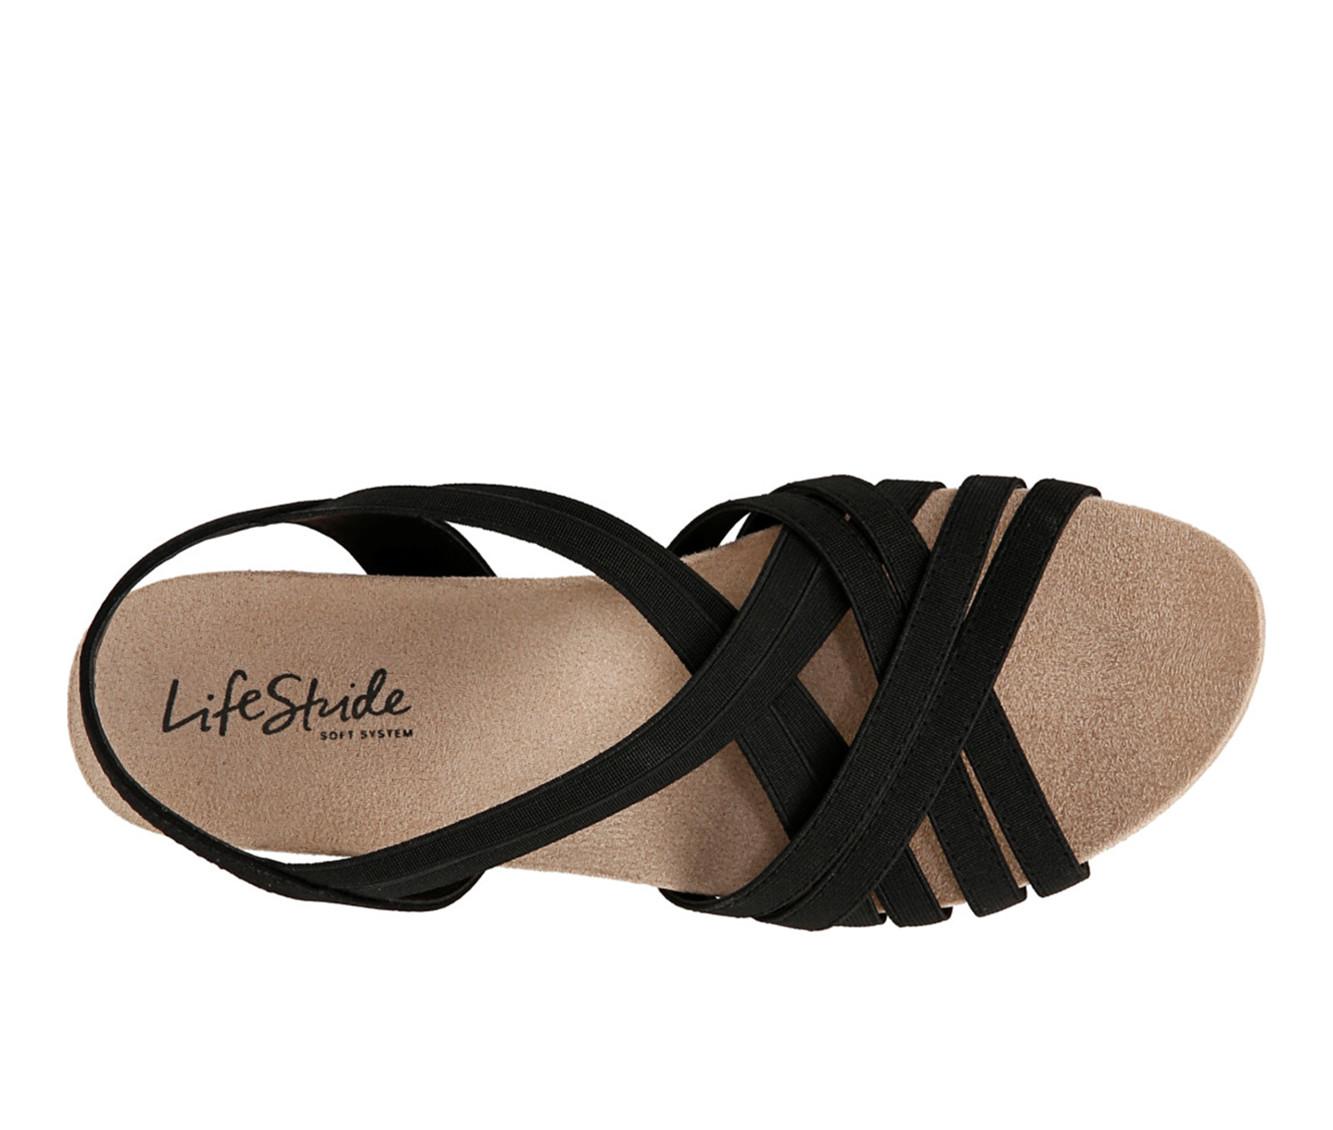 Women's LifeStride Mallory Wedge Sandals